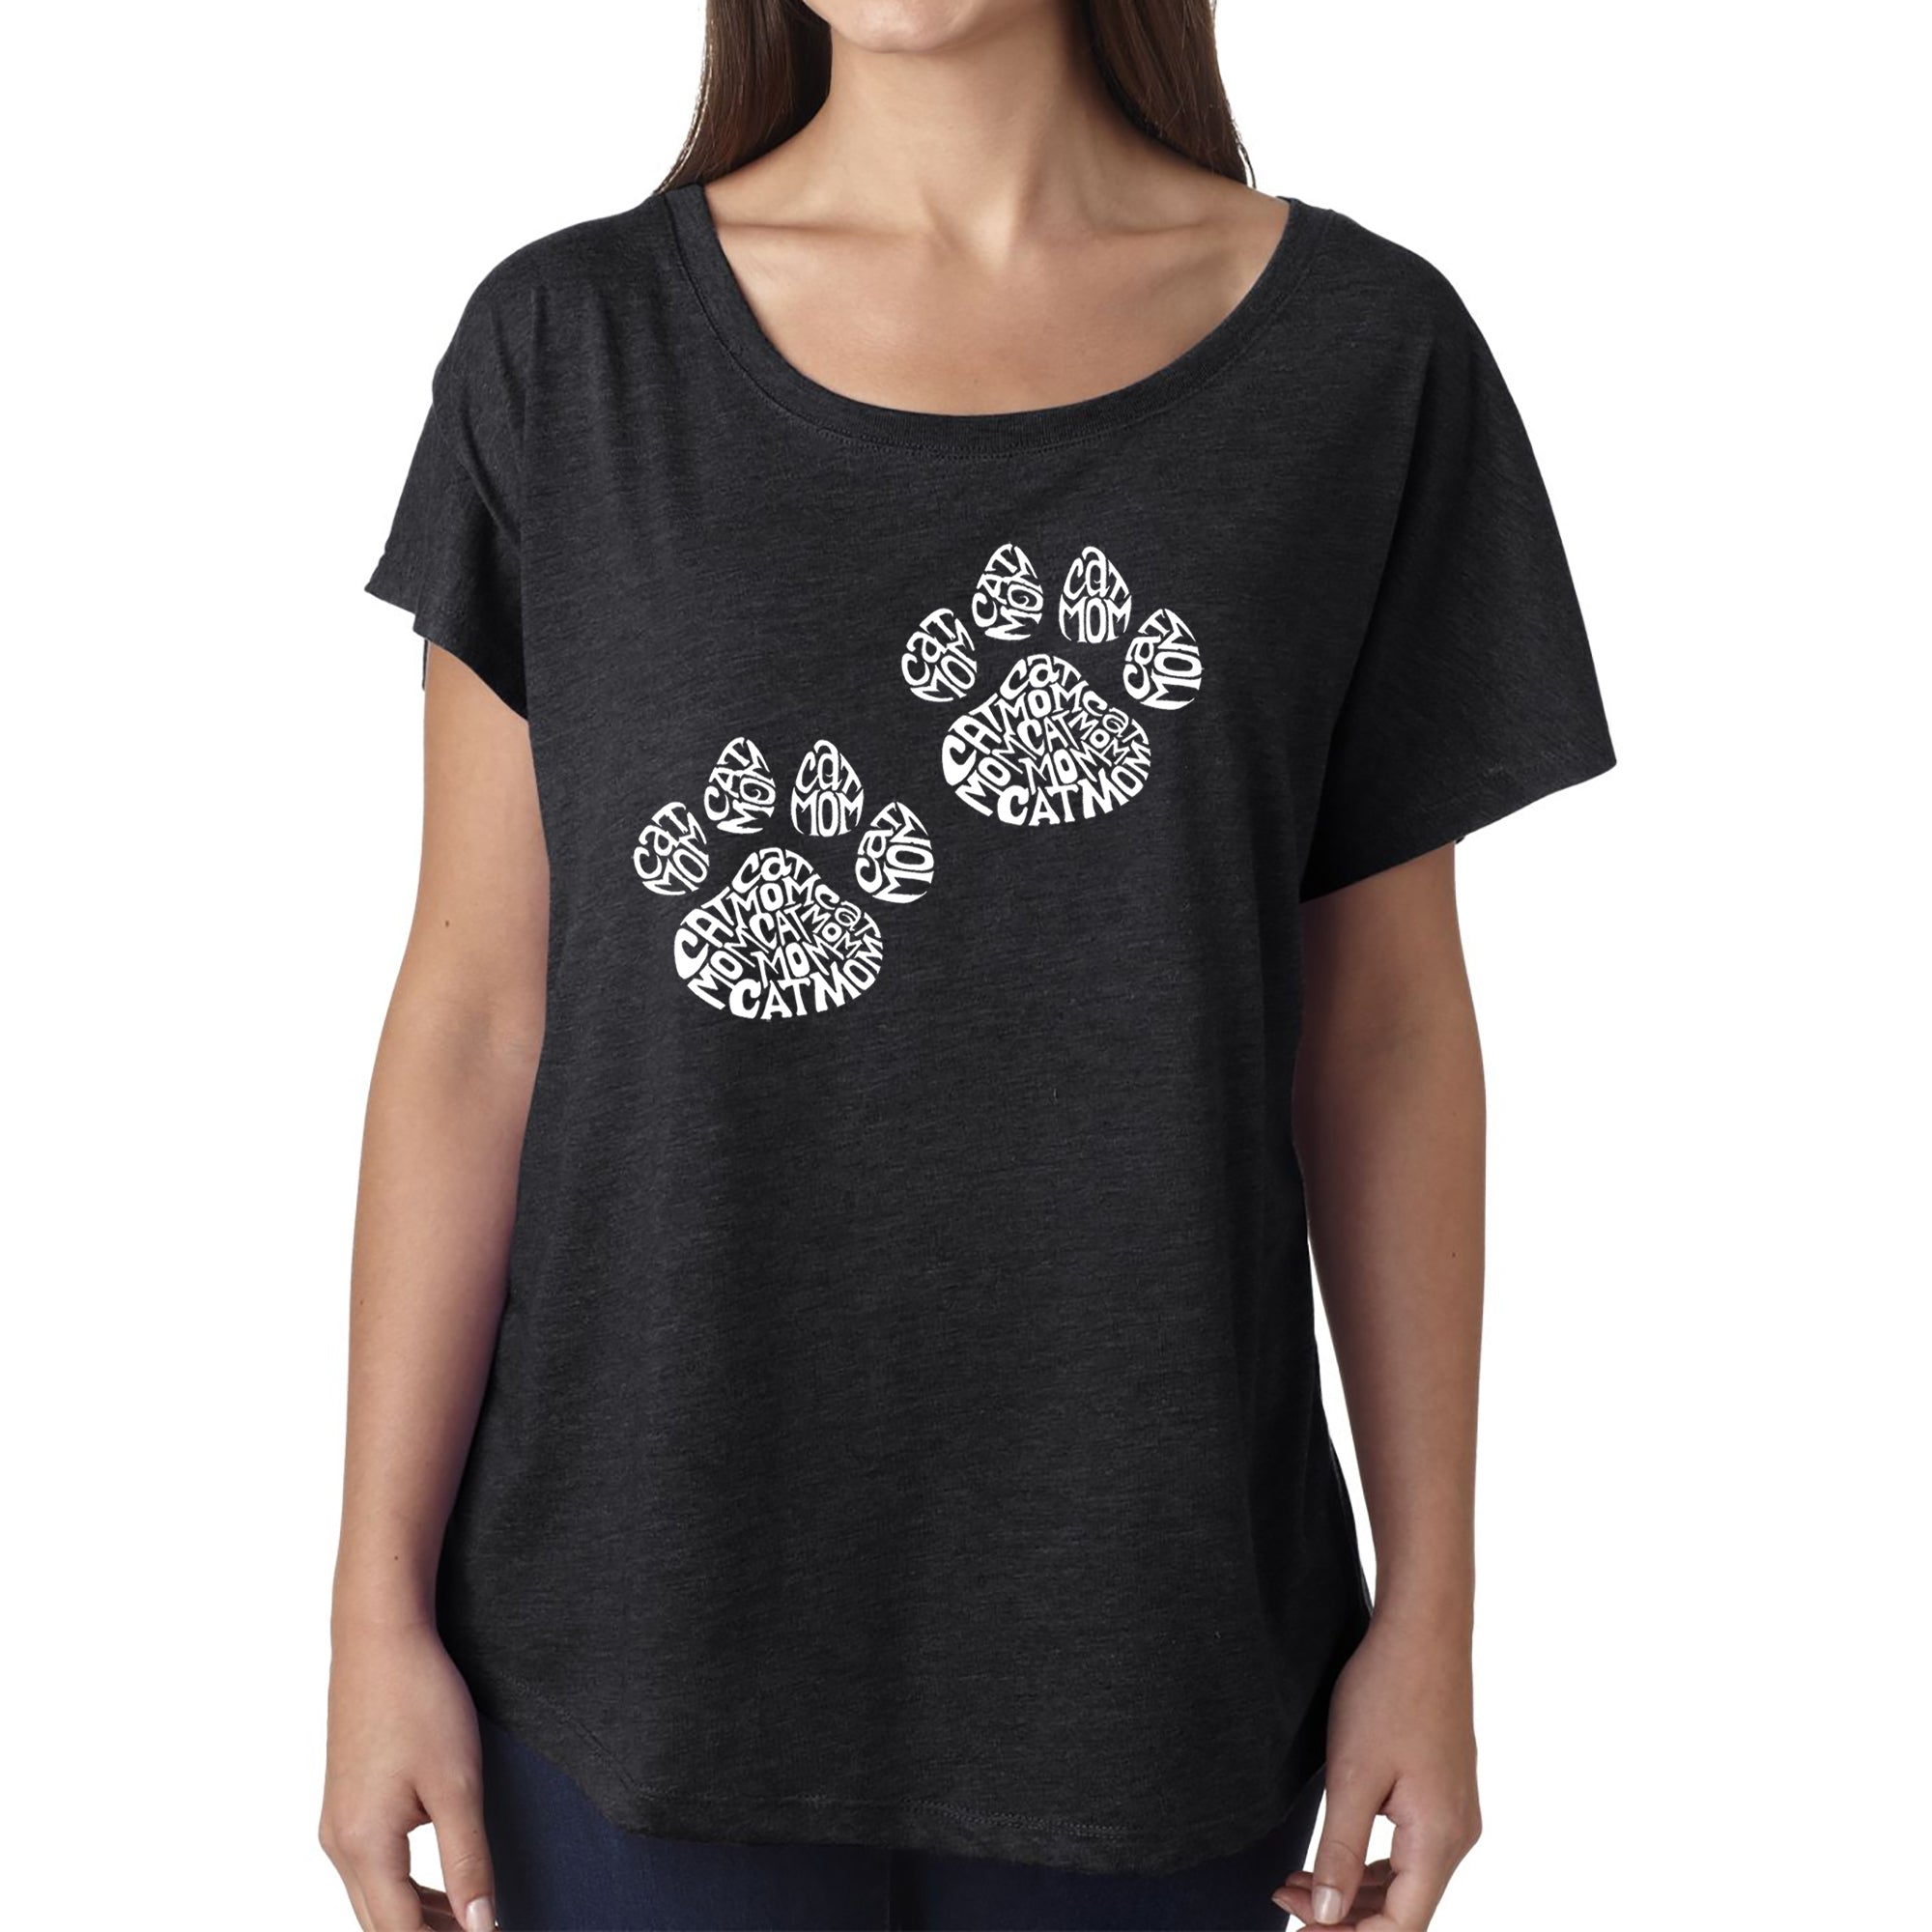 Cat Mom - Women's Loose Fit Dolman Cut Word Art Shirt - Black - Large